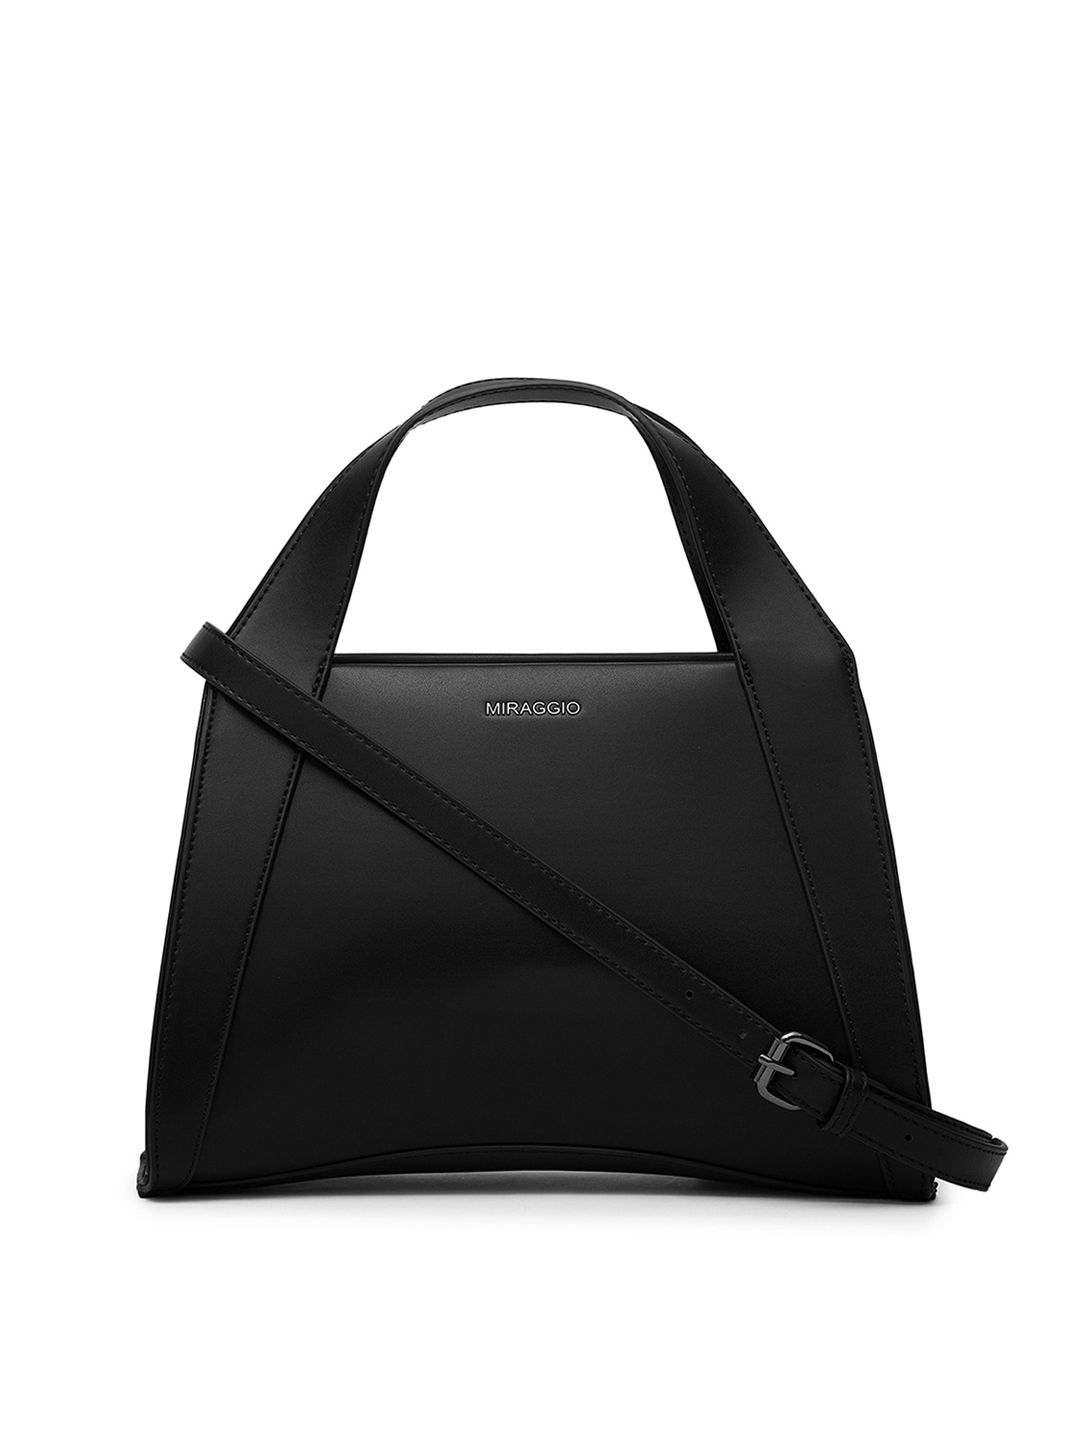 MIRAGGIO Black Structured Satchel Handbag with Top Handles Price in India